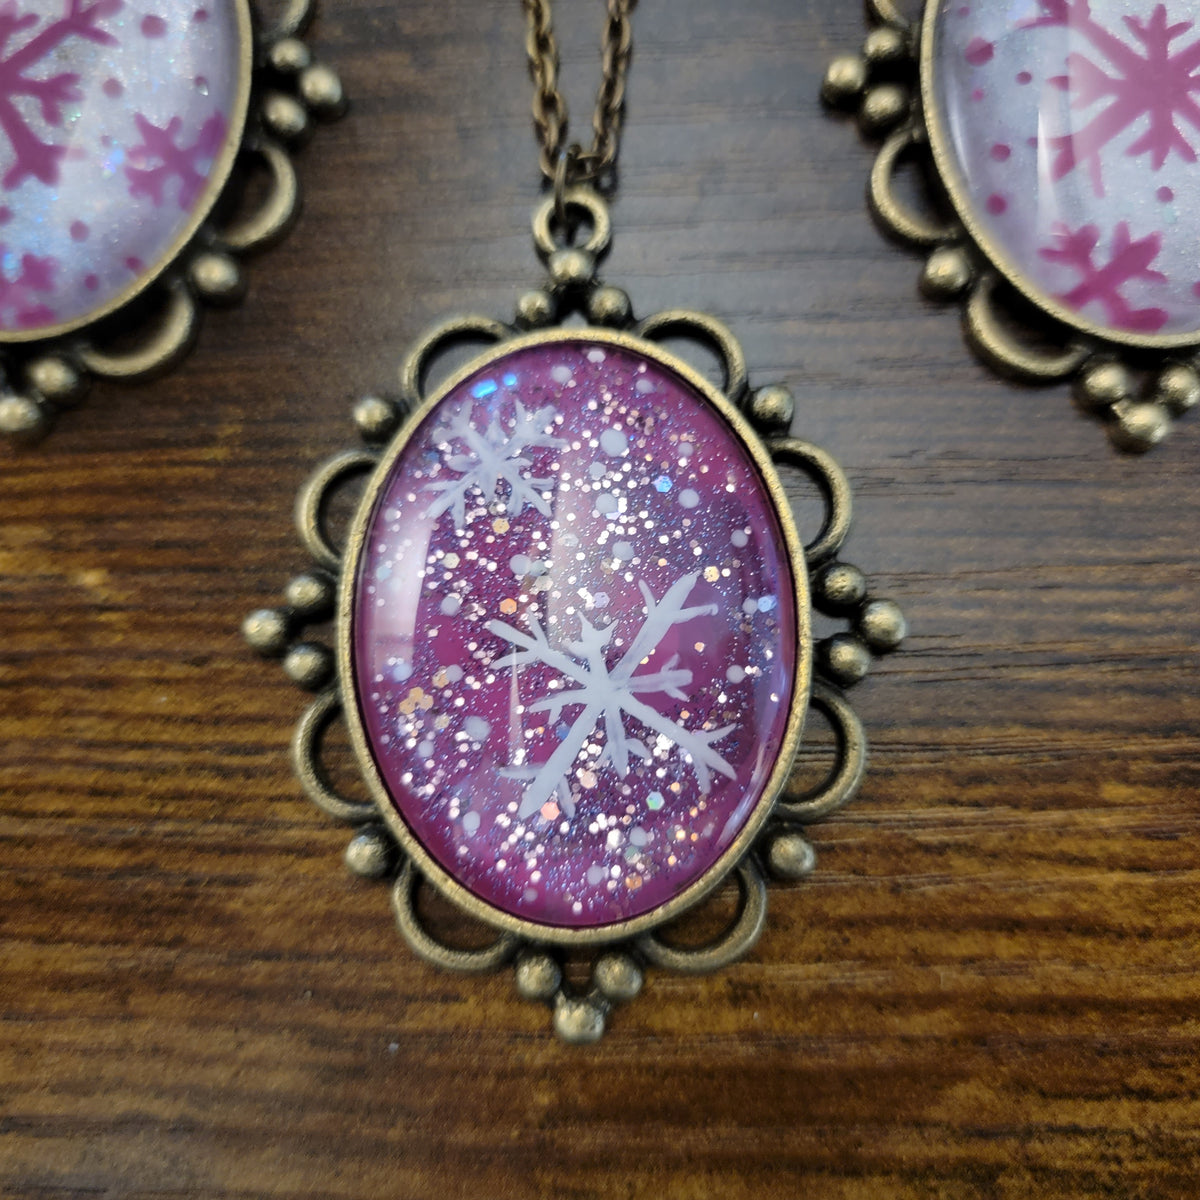 Snowflake Pendants: Pinks